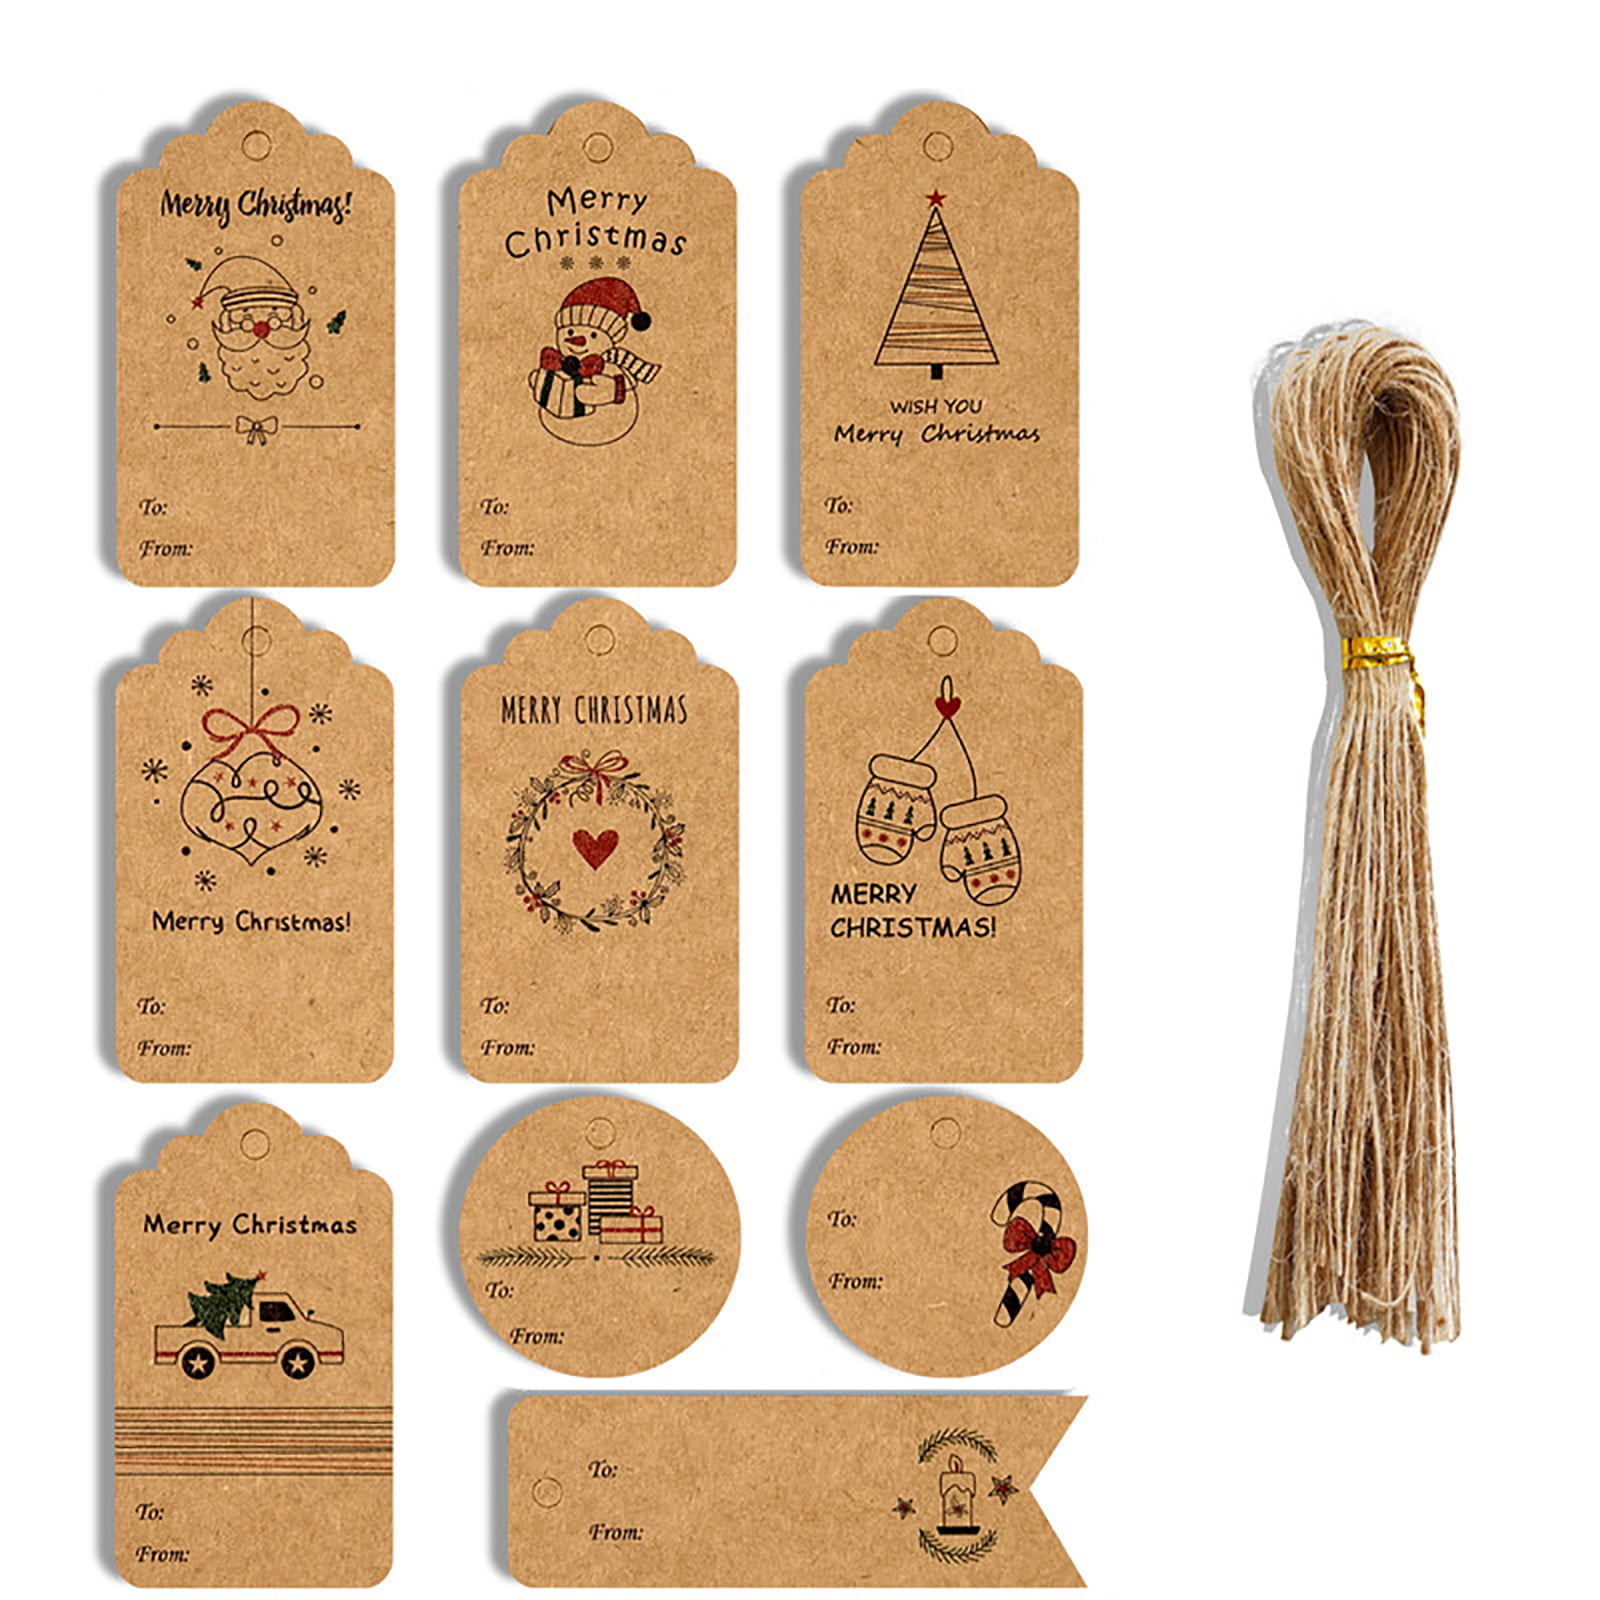 50PCS Paper Tags Handmade/Thank You DIY Crafts Hang Tag Gift Merry Christmas 